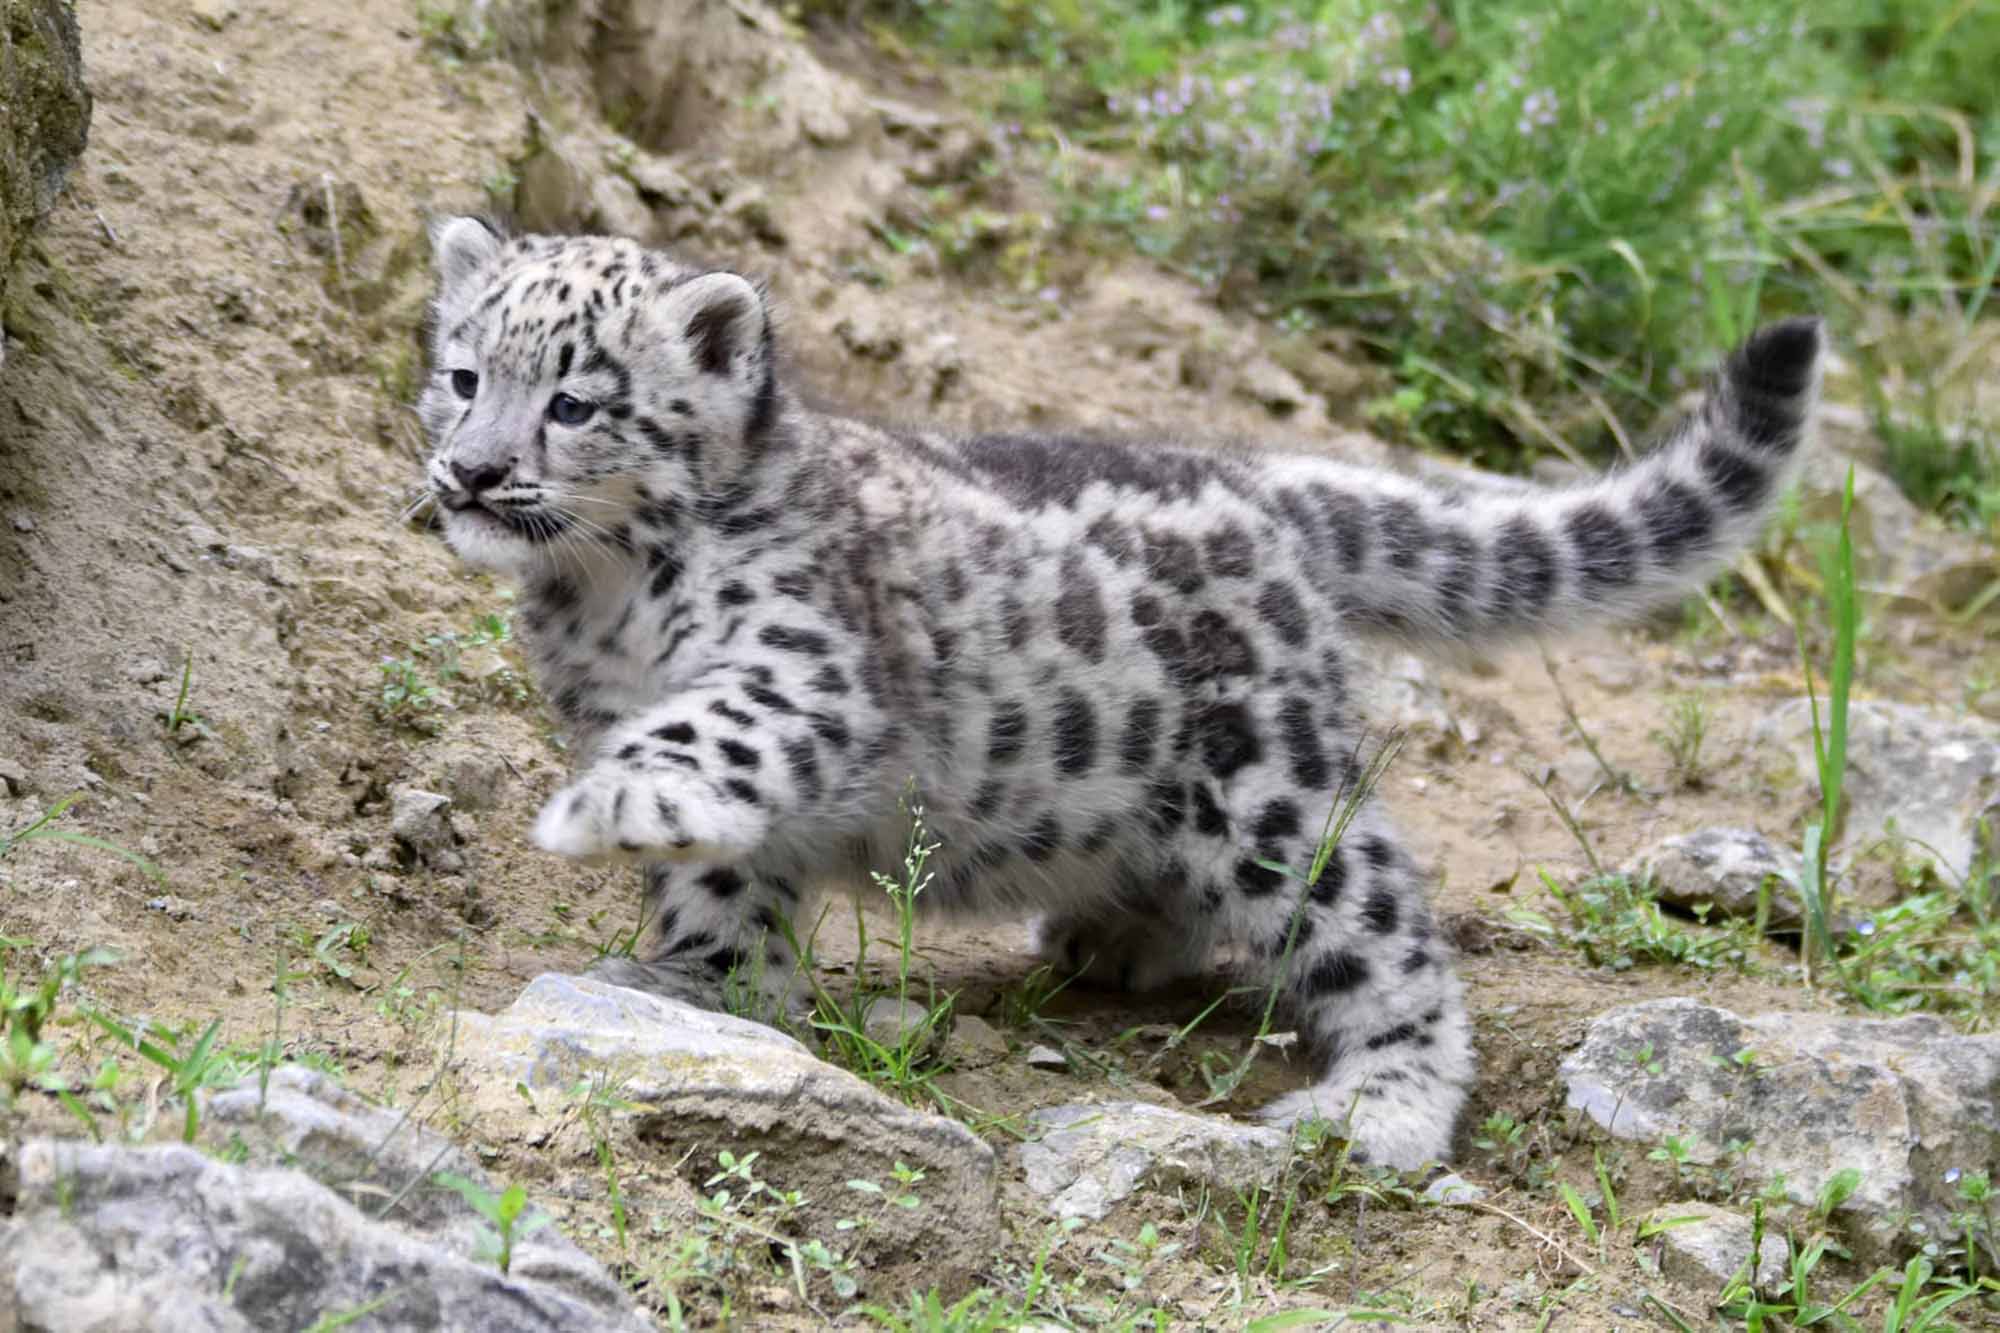 Poland's Wroclaw Zoo welcomes newborn snow leopards